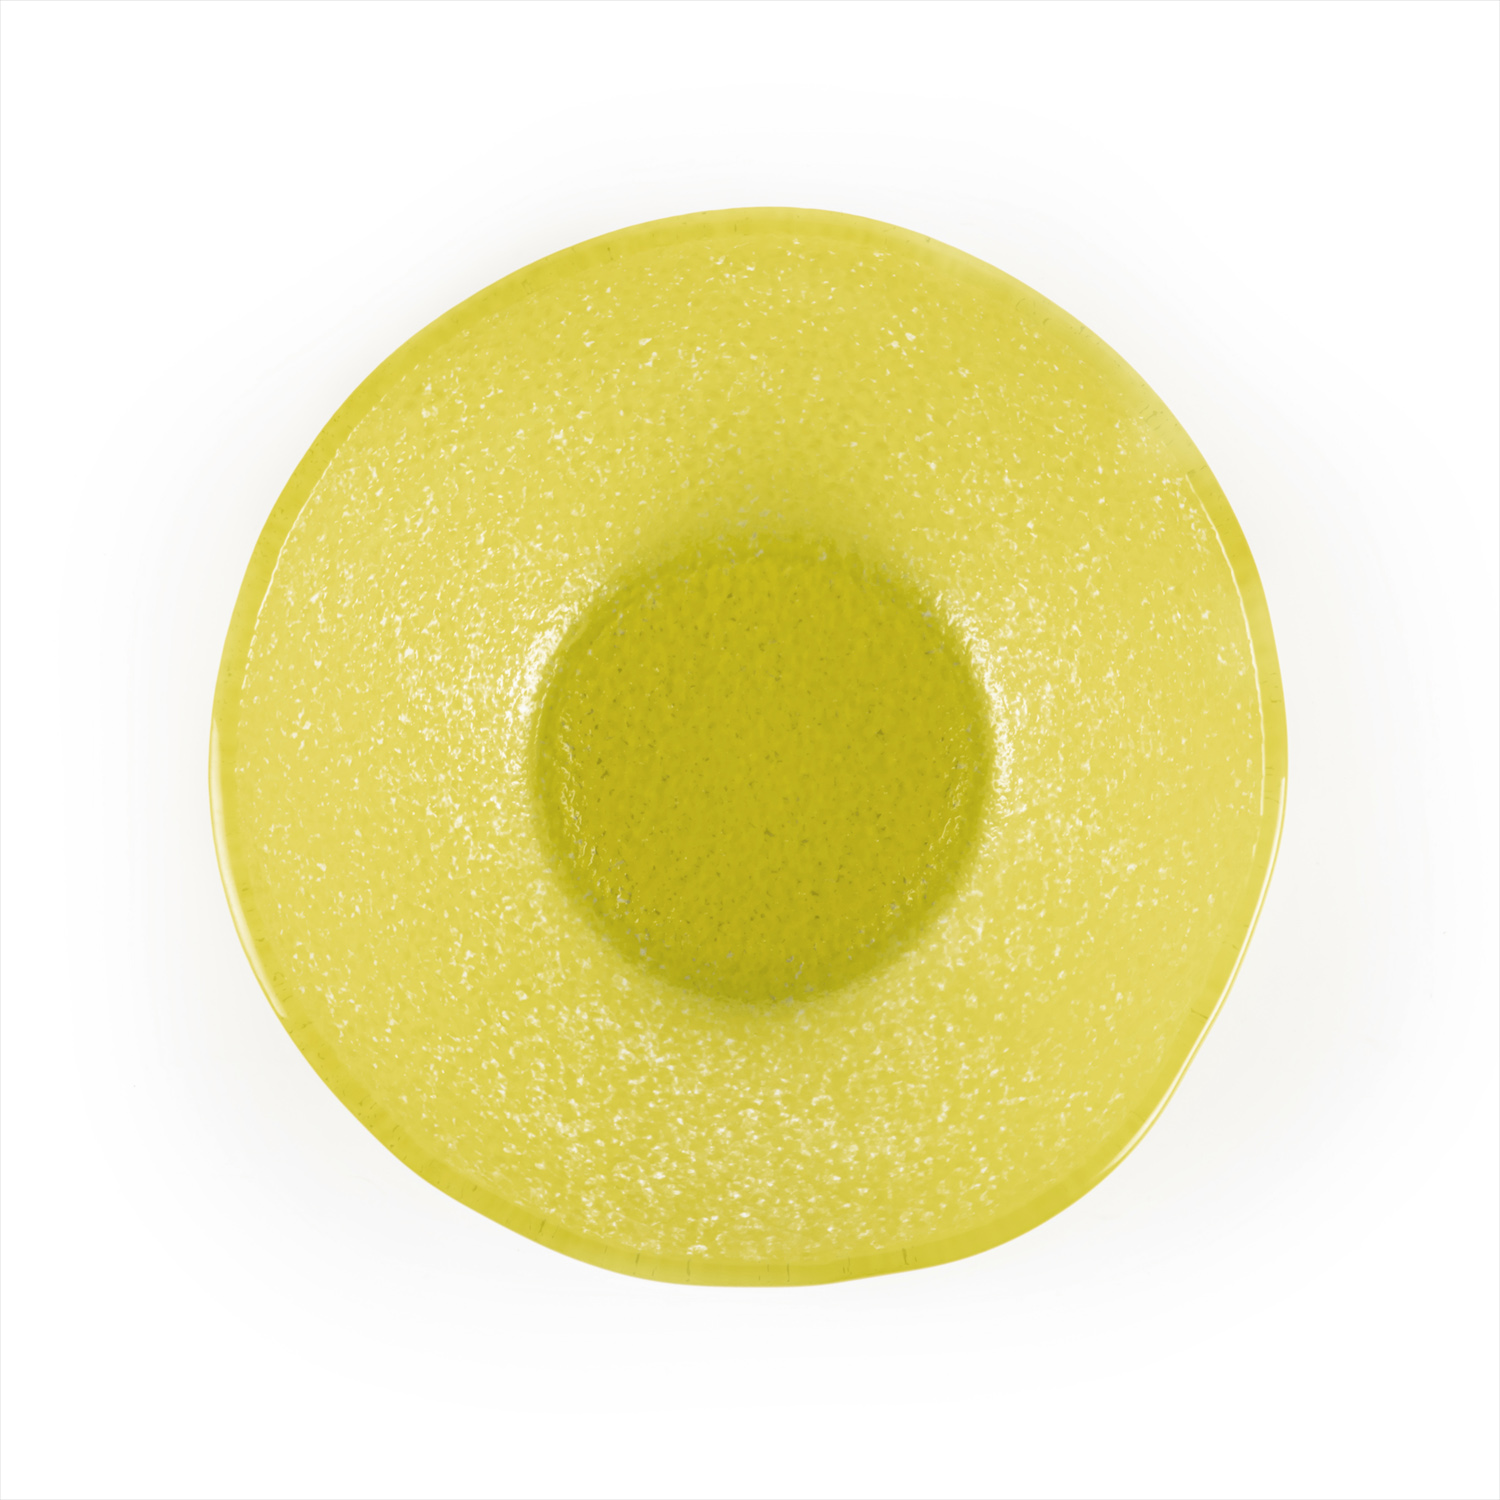 Fusion Glass Bowl Yellow Round 7.5″ x 7.5″ x 2.75″  20 oz. CasePack:12